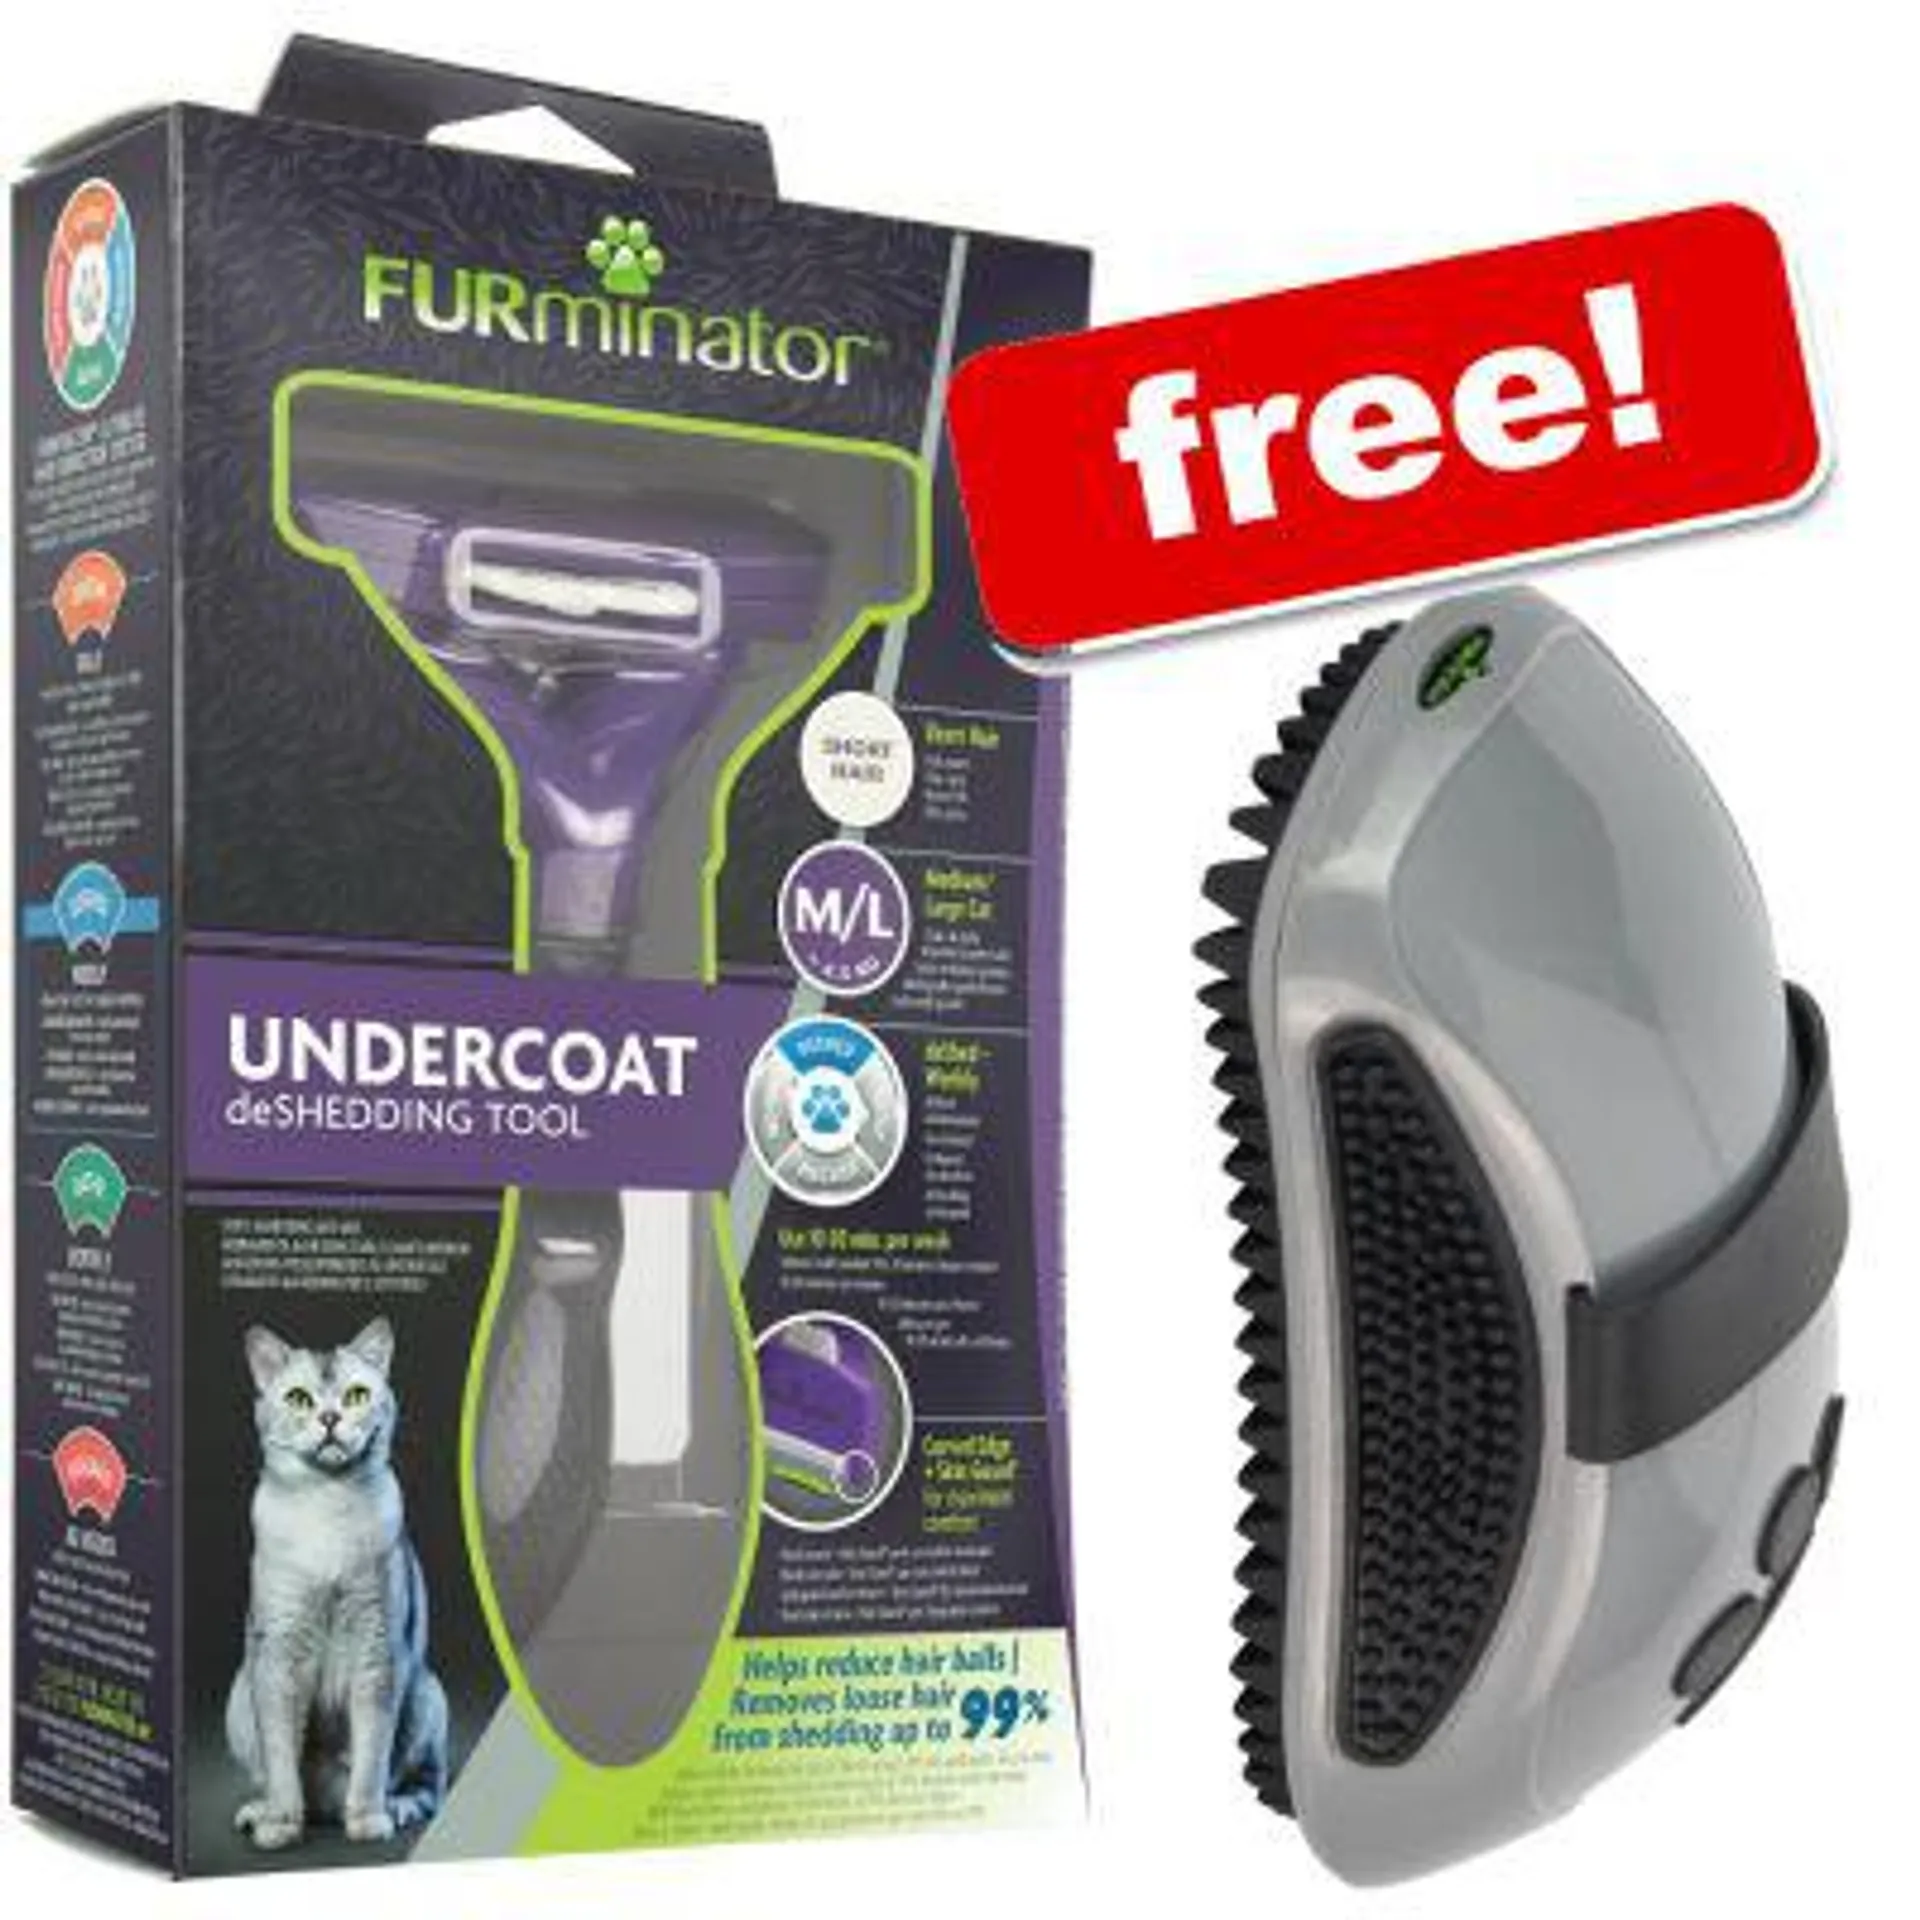 FURminator DeShedding Tool for Cats + FURminator Curry Comb Free!*